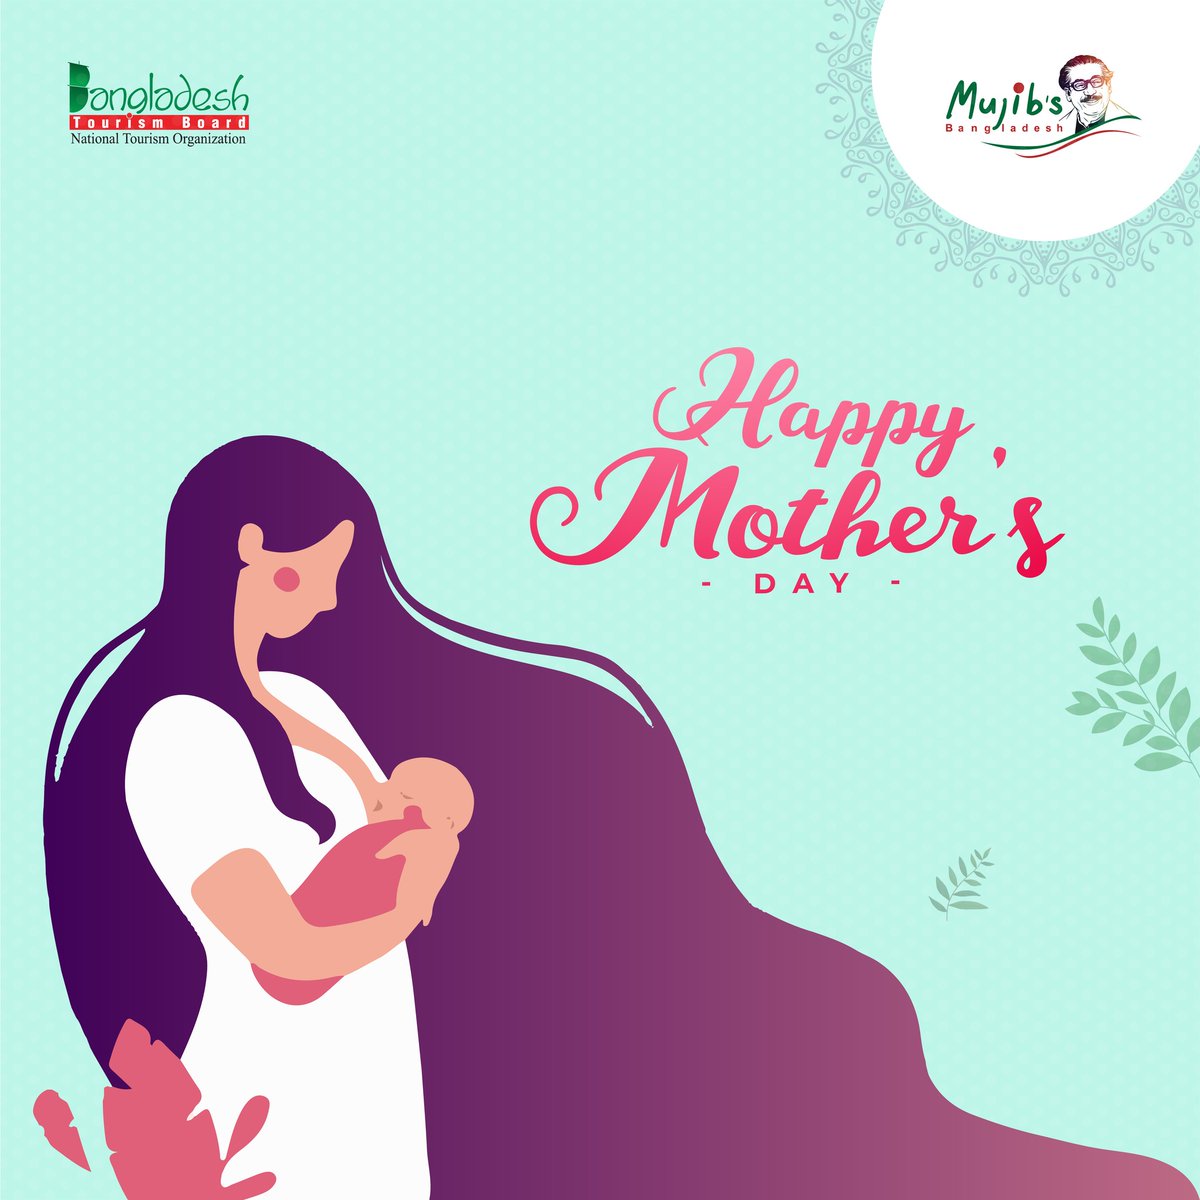 Happy Mother's Day!

#btb #beautifulbangladesh #tourism #Mujibs_Bangladesh #Bangladesh #MothersDay #HappyMothersDay #MomLove
#ThankYouMom